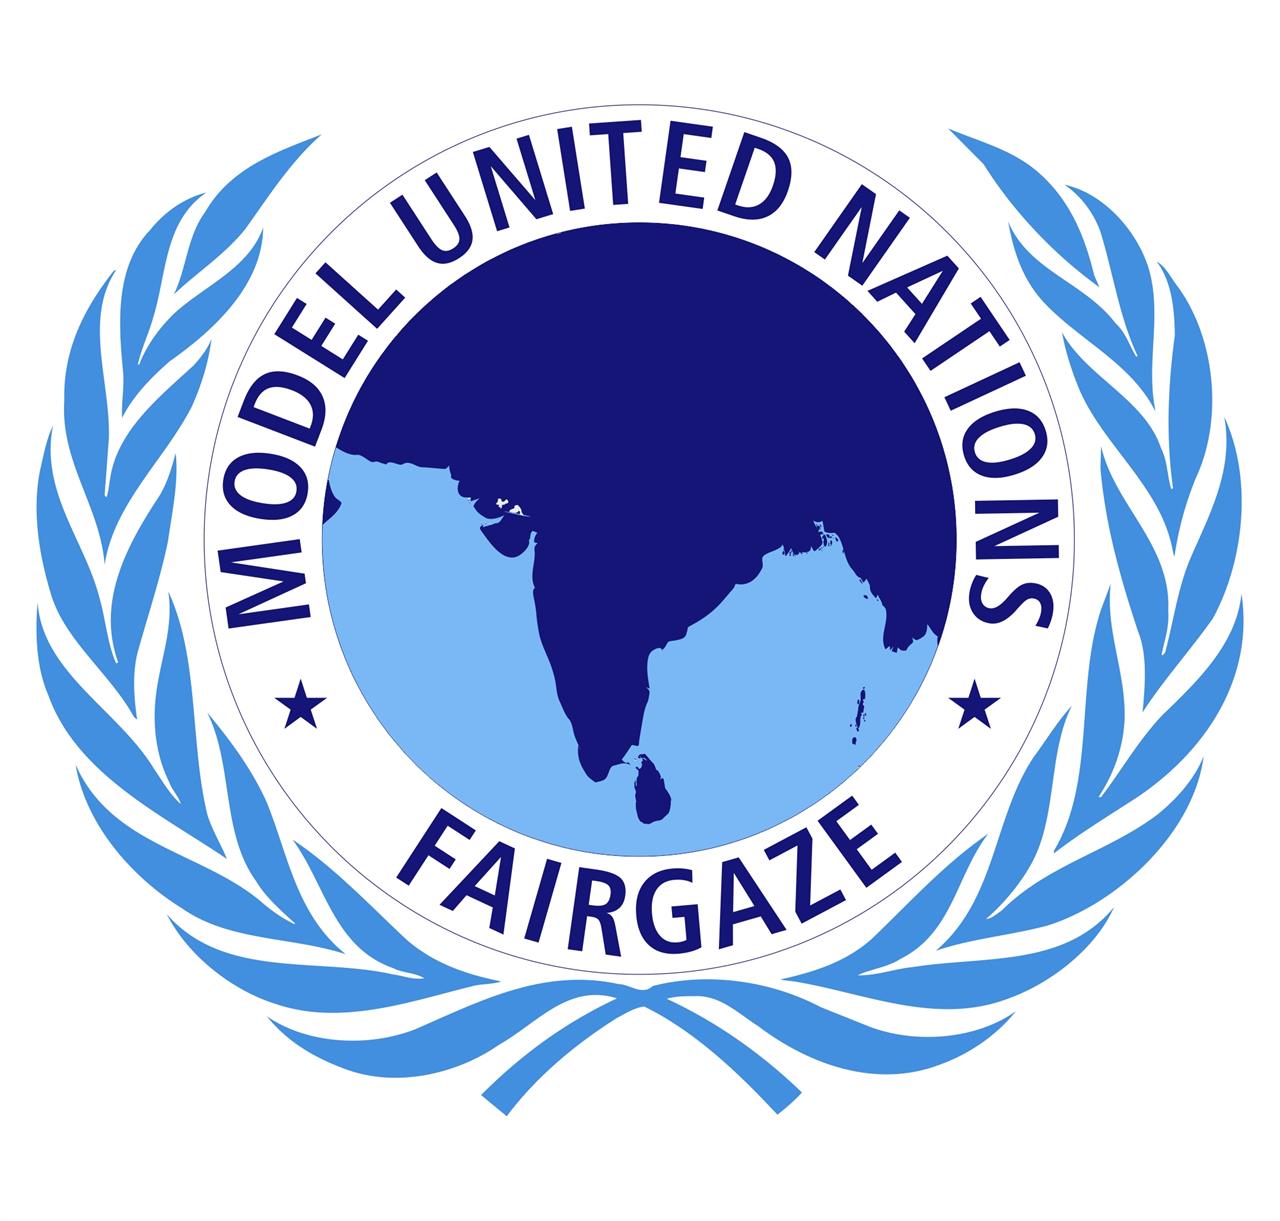 FAIRGAZE MODEL UNITED NATIONS